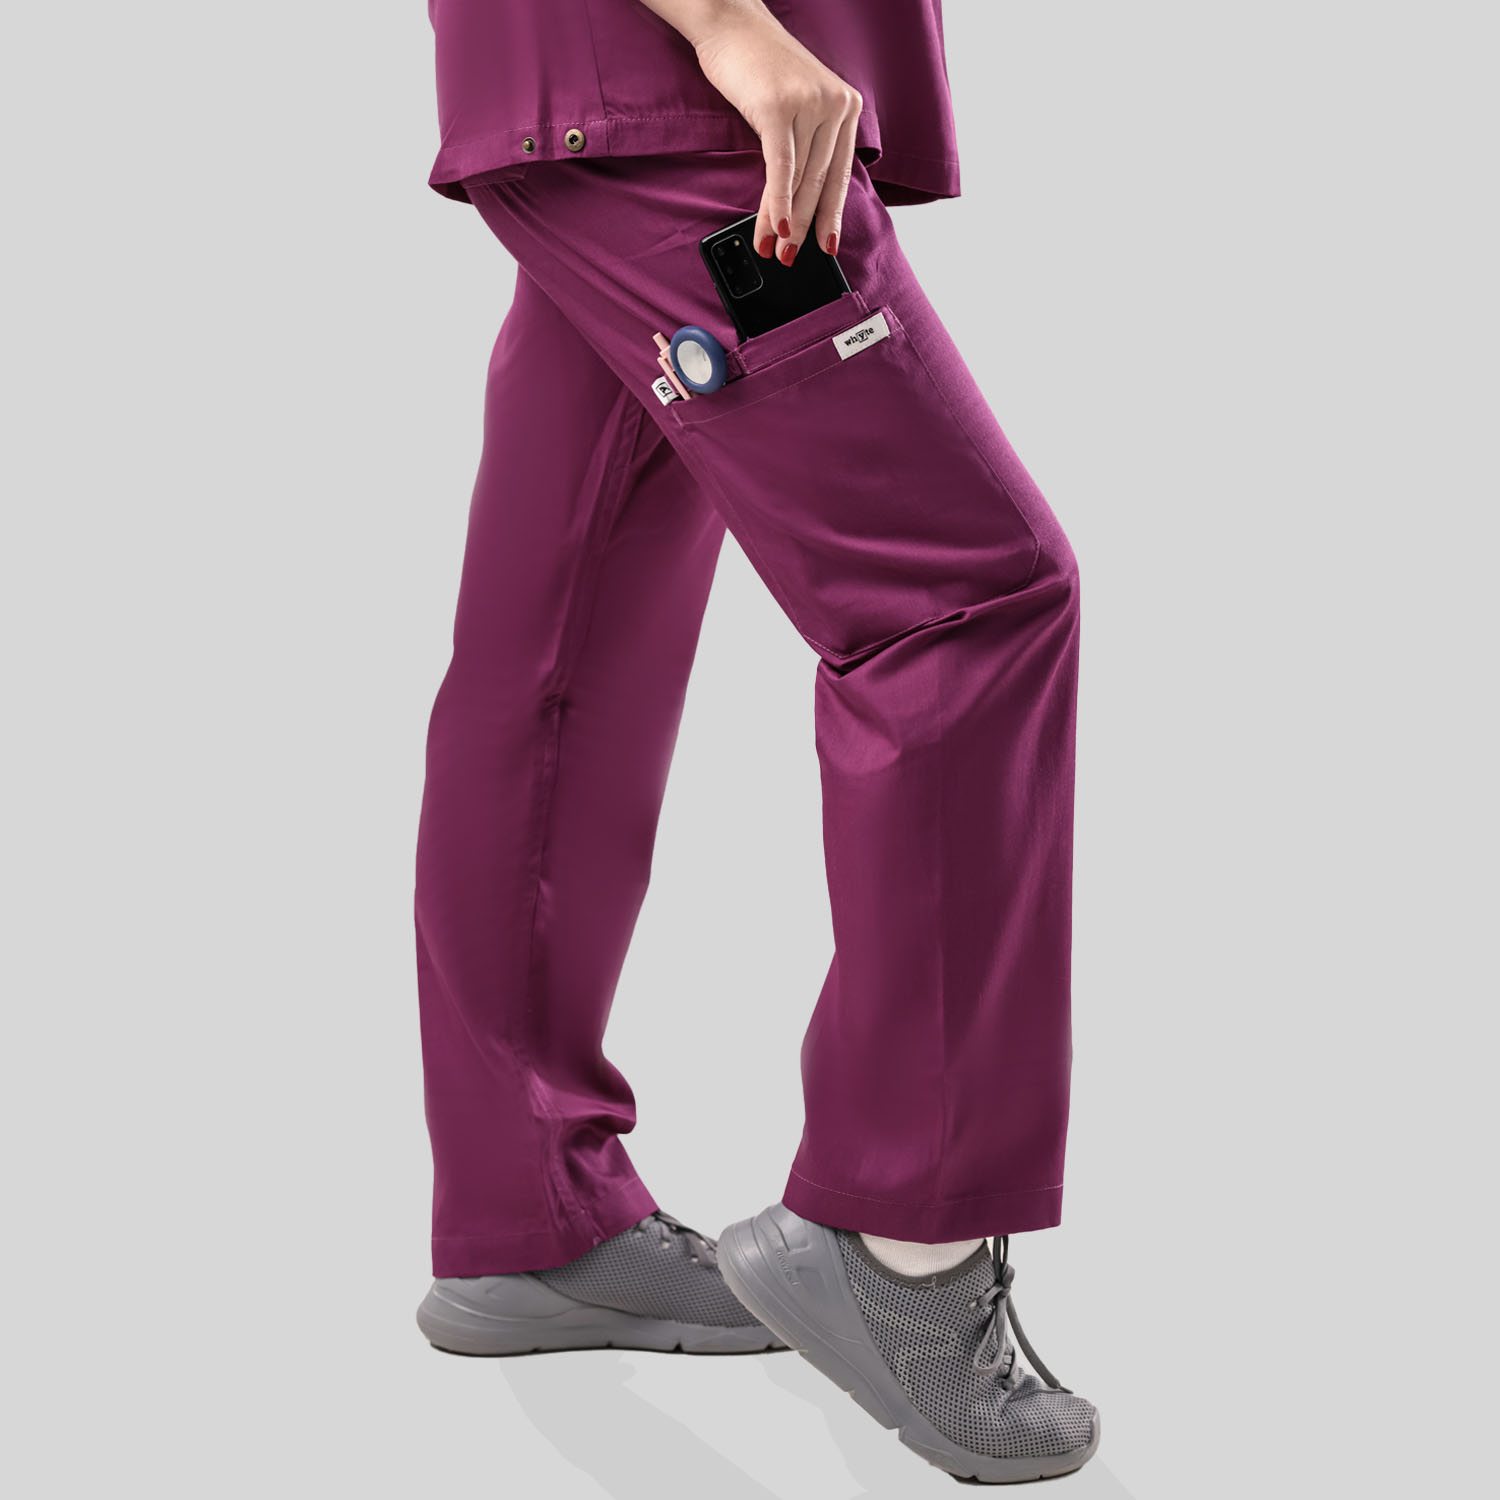 classic edition 2.0 - purple-pant 3 pockets